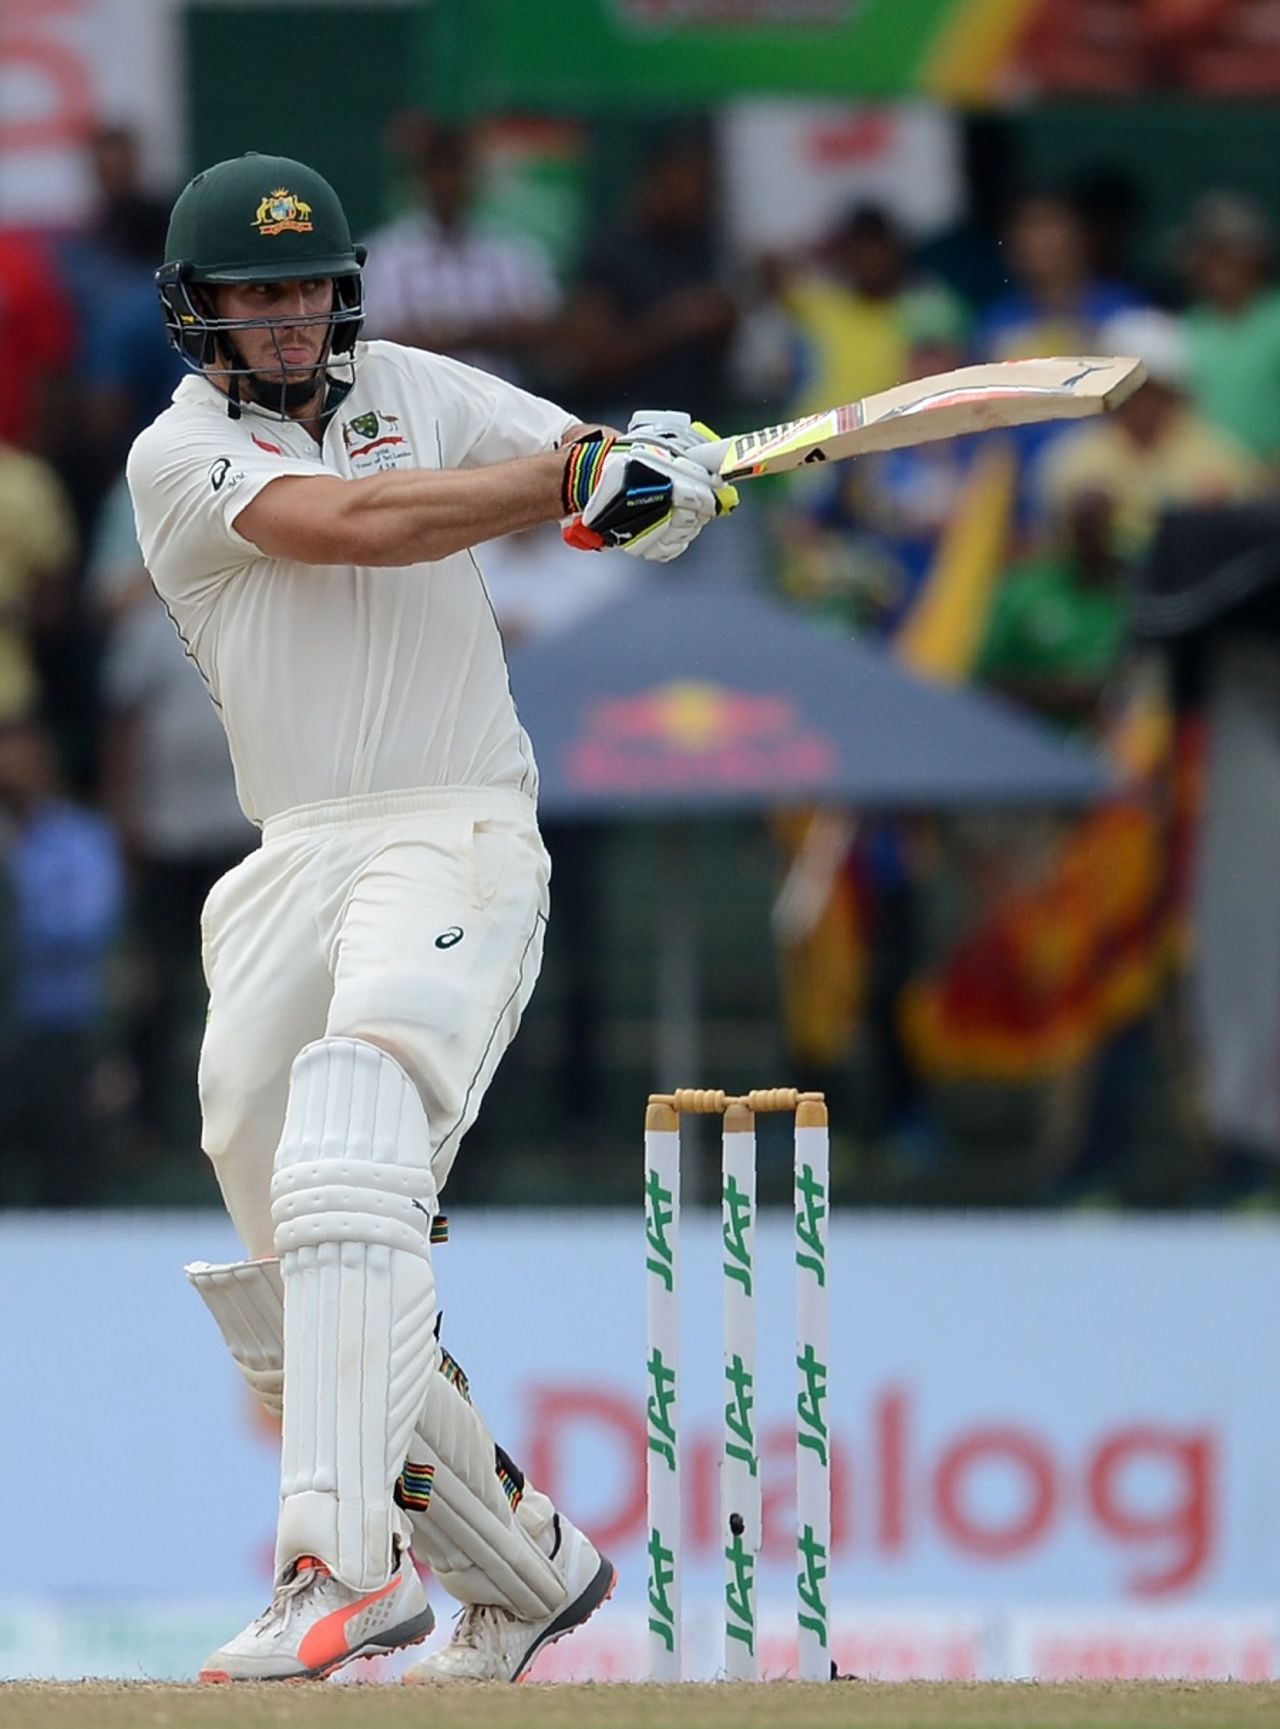 Mitchell Marsh pulls one en route to his 53, Sri Lanka v Australia, 3rd Test, SSC, 3rd day, August 15, 2016